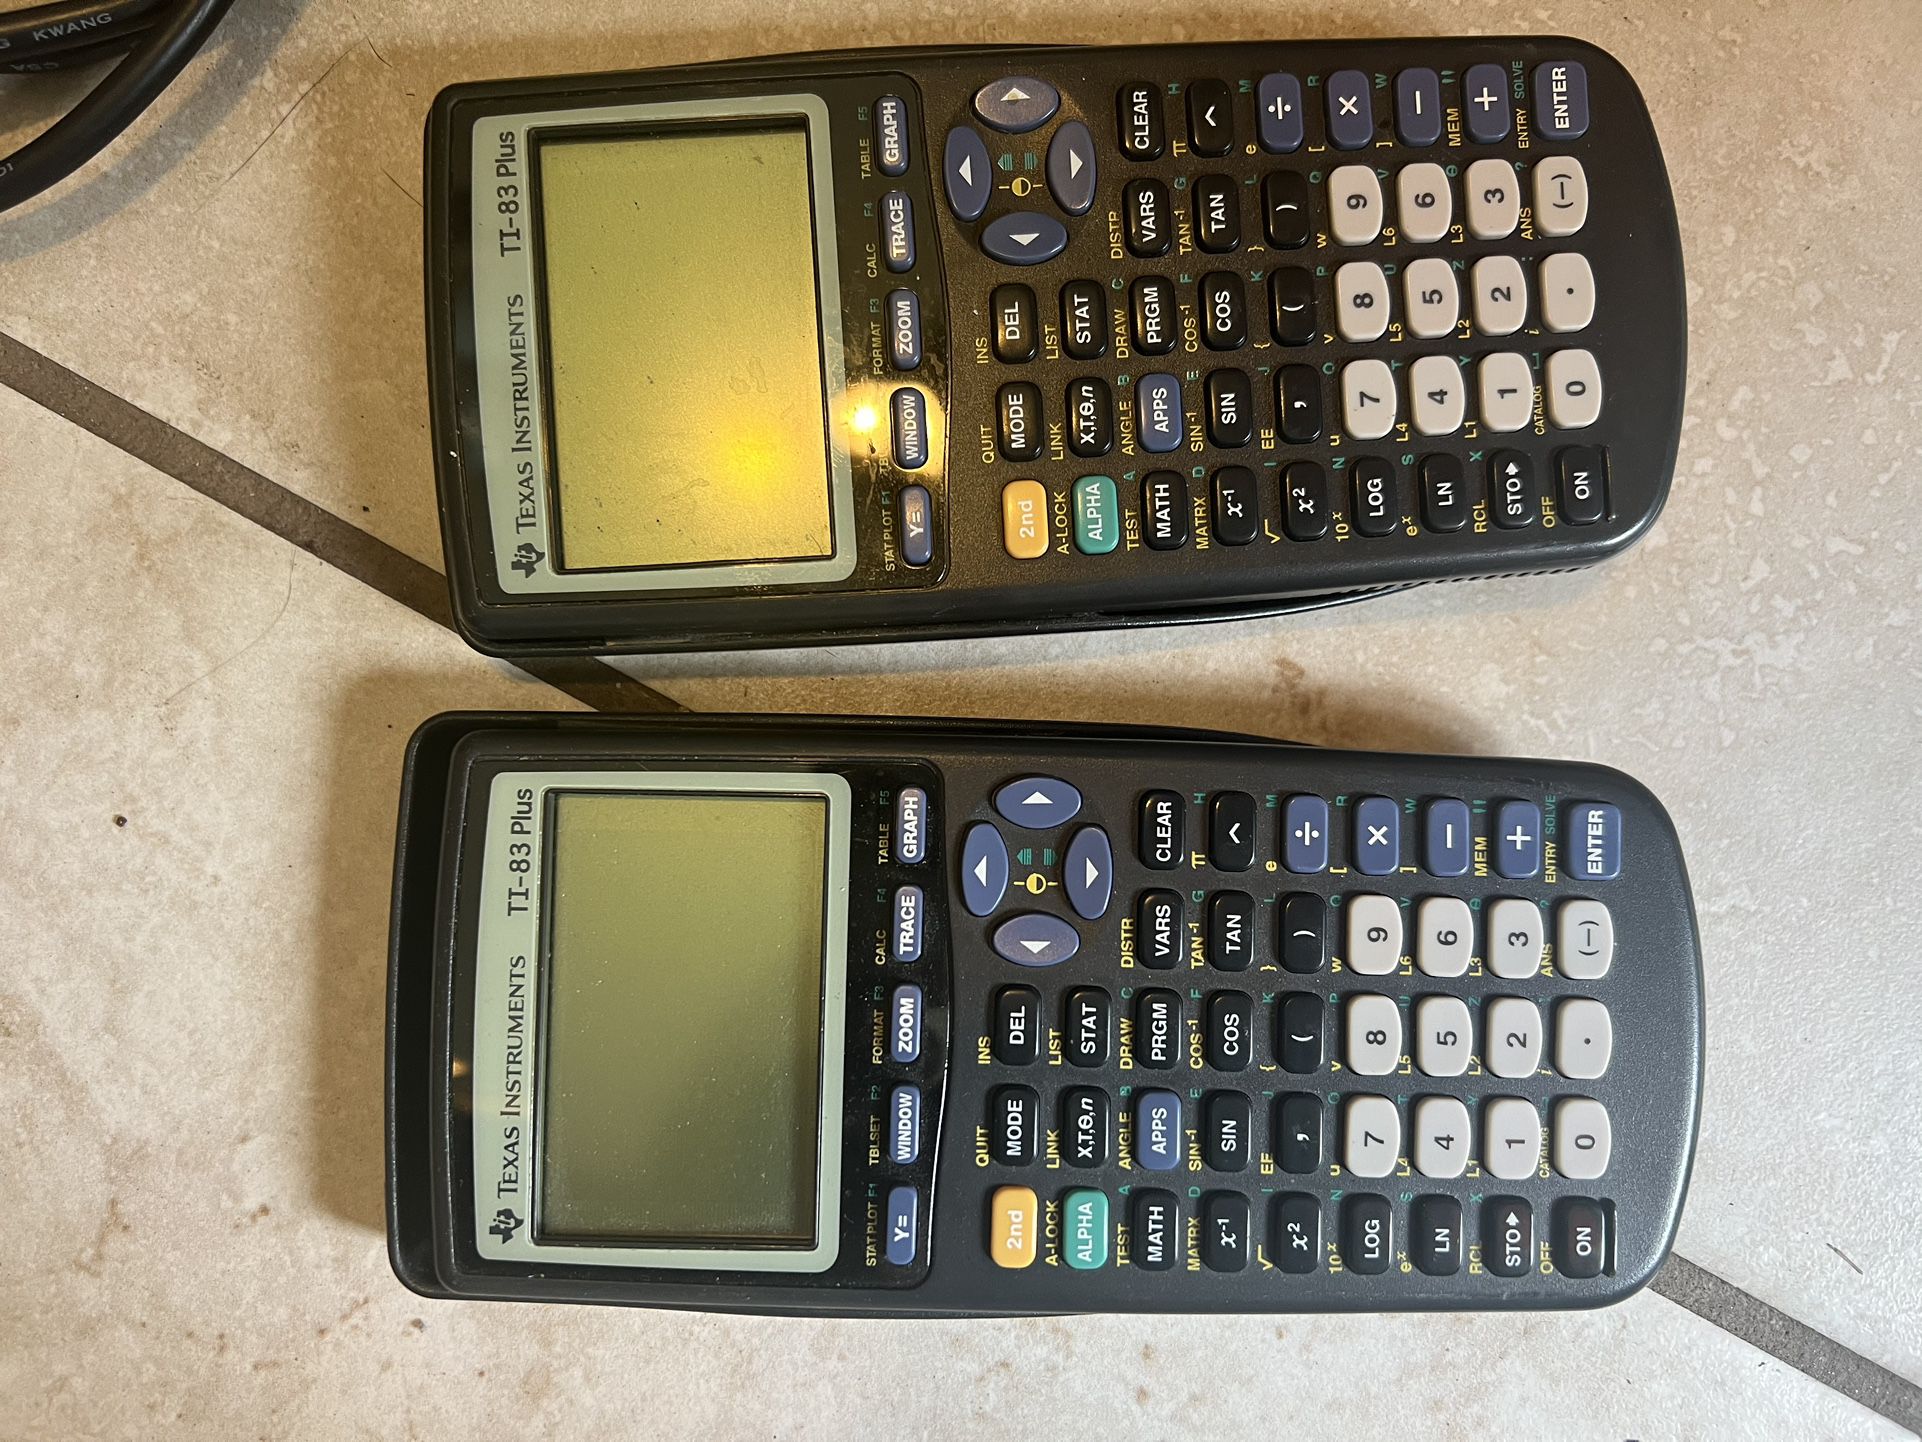 2 TI-83 Plus Calculators 